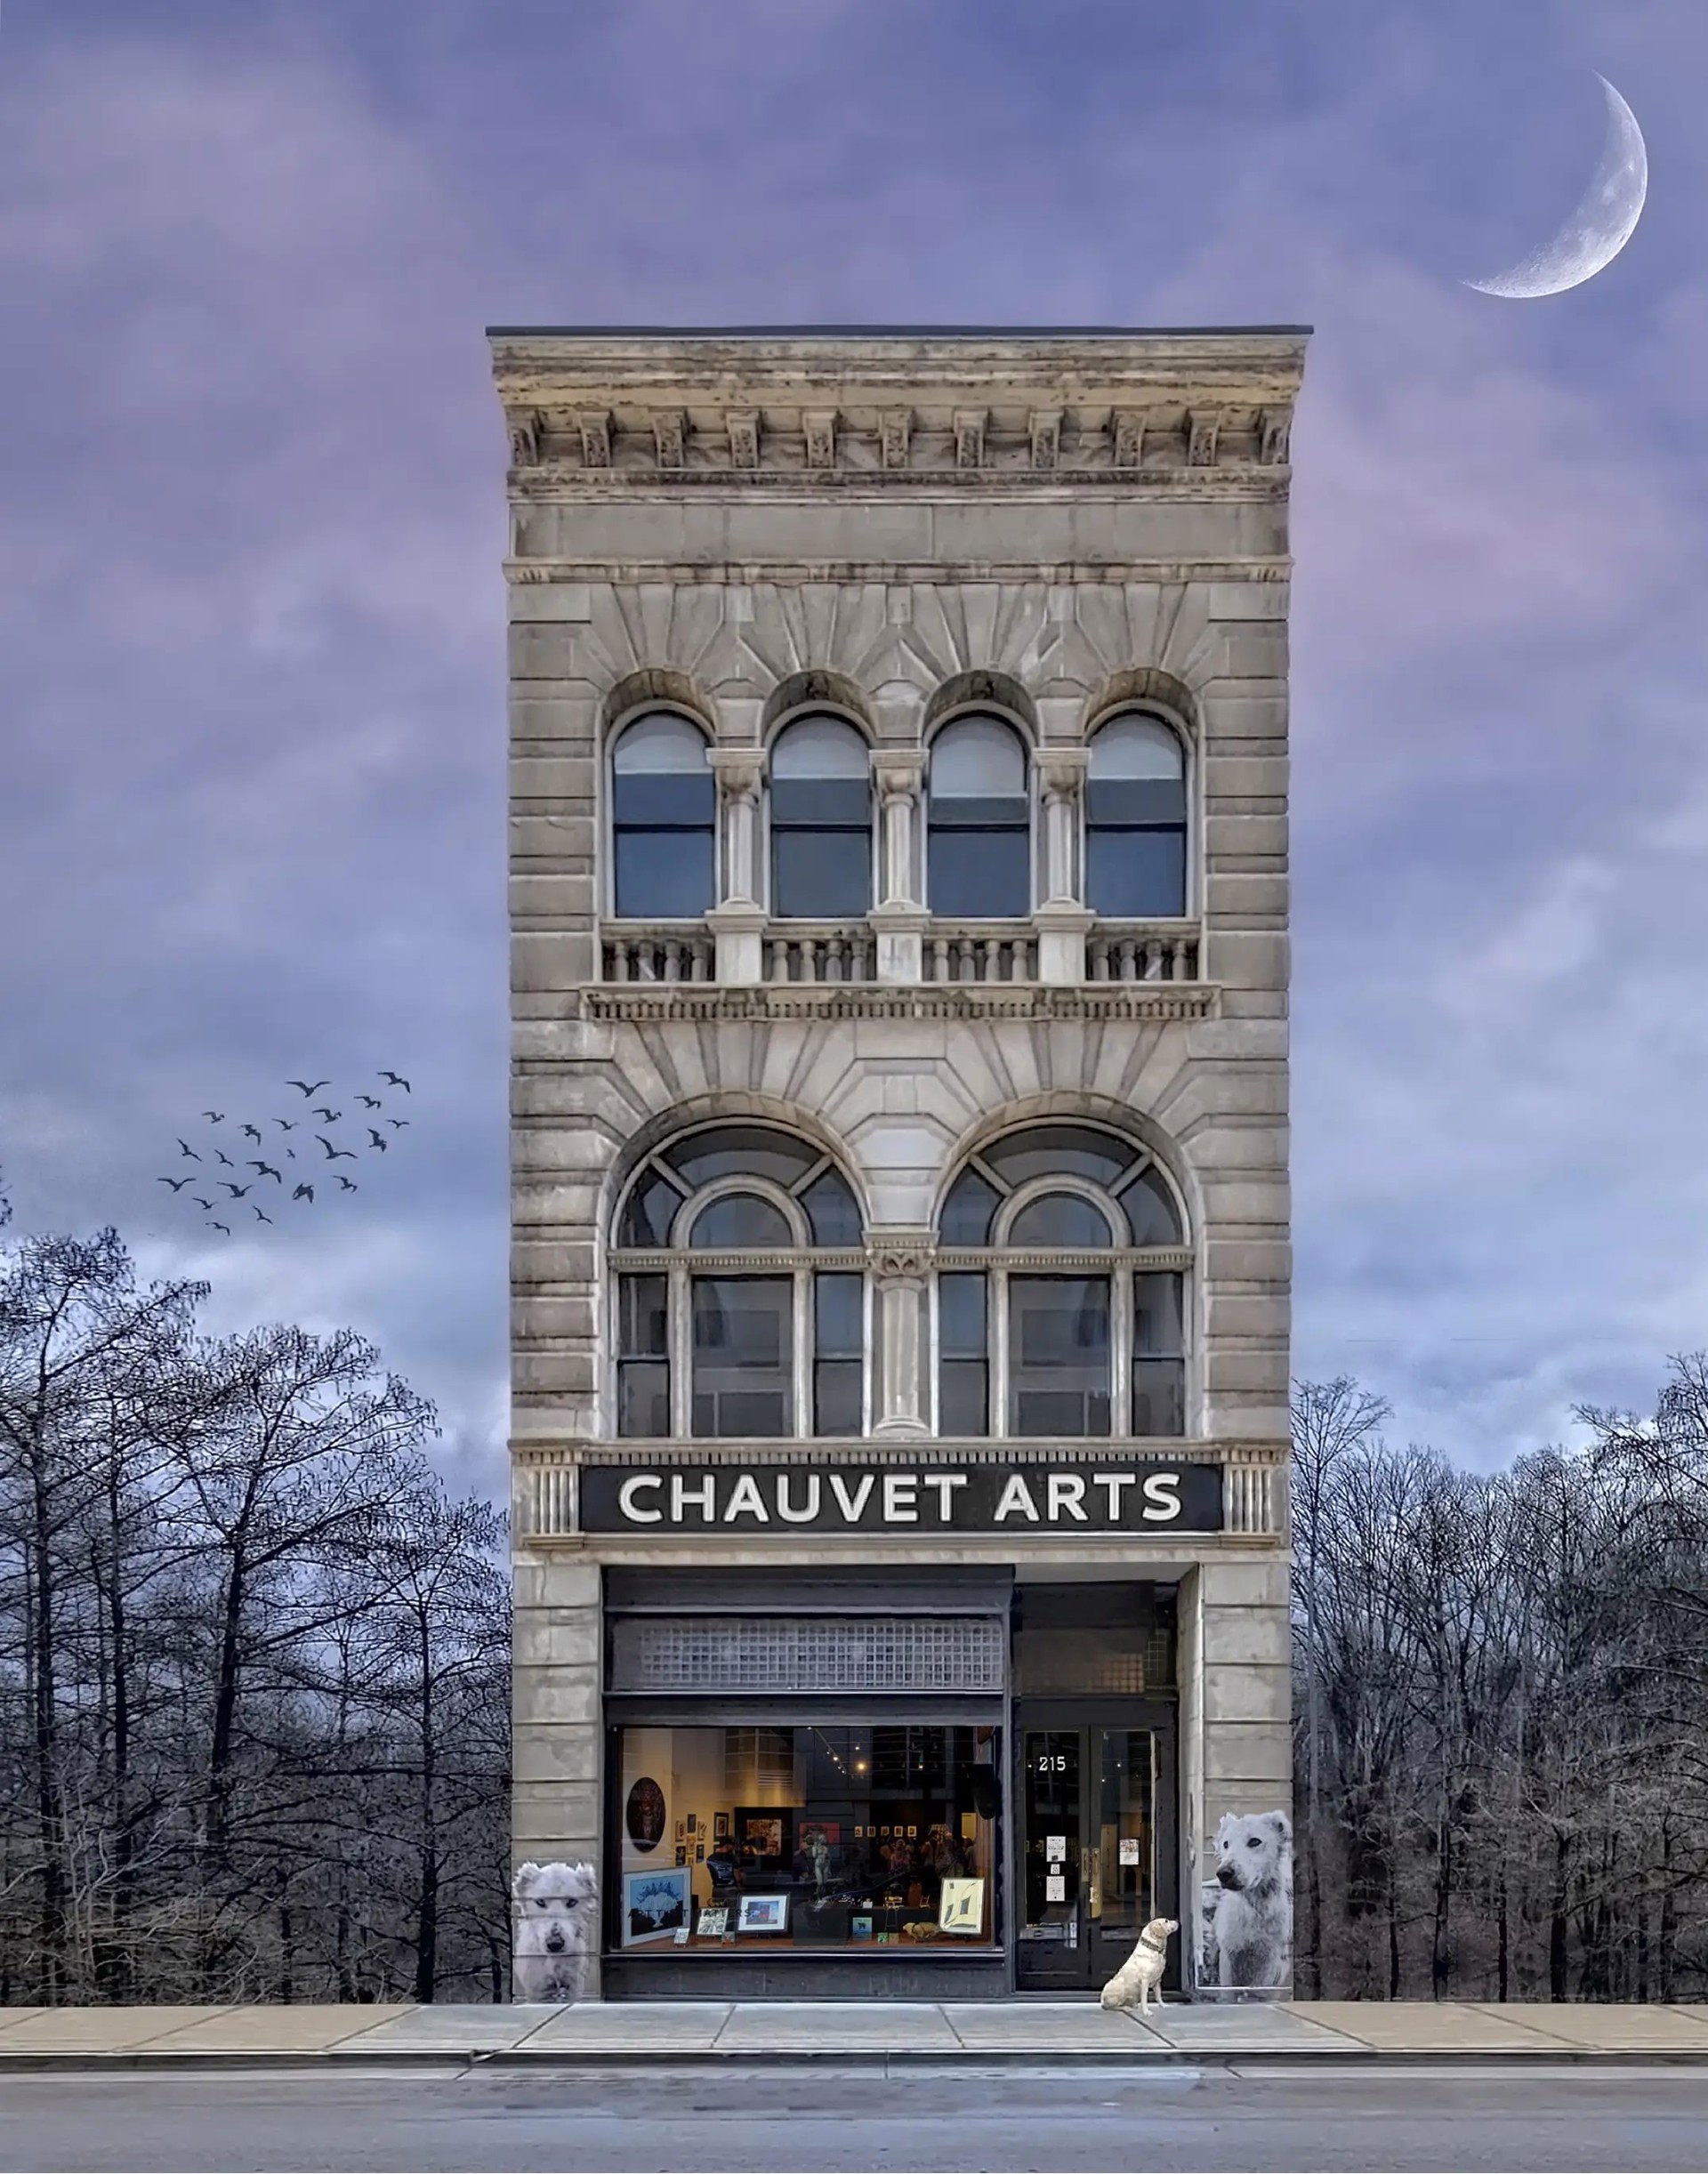 Chauvet Arts by Bill Scott